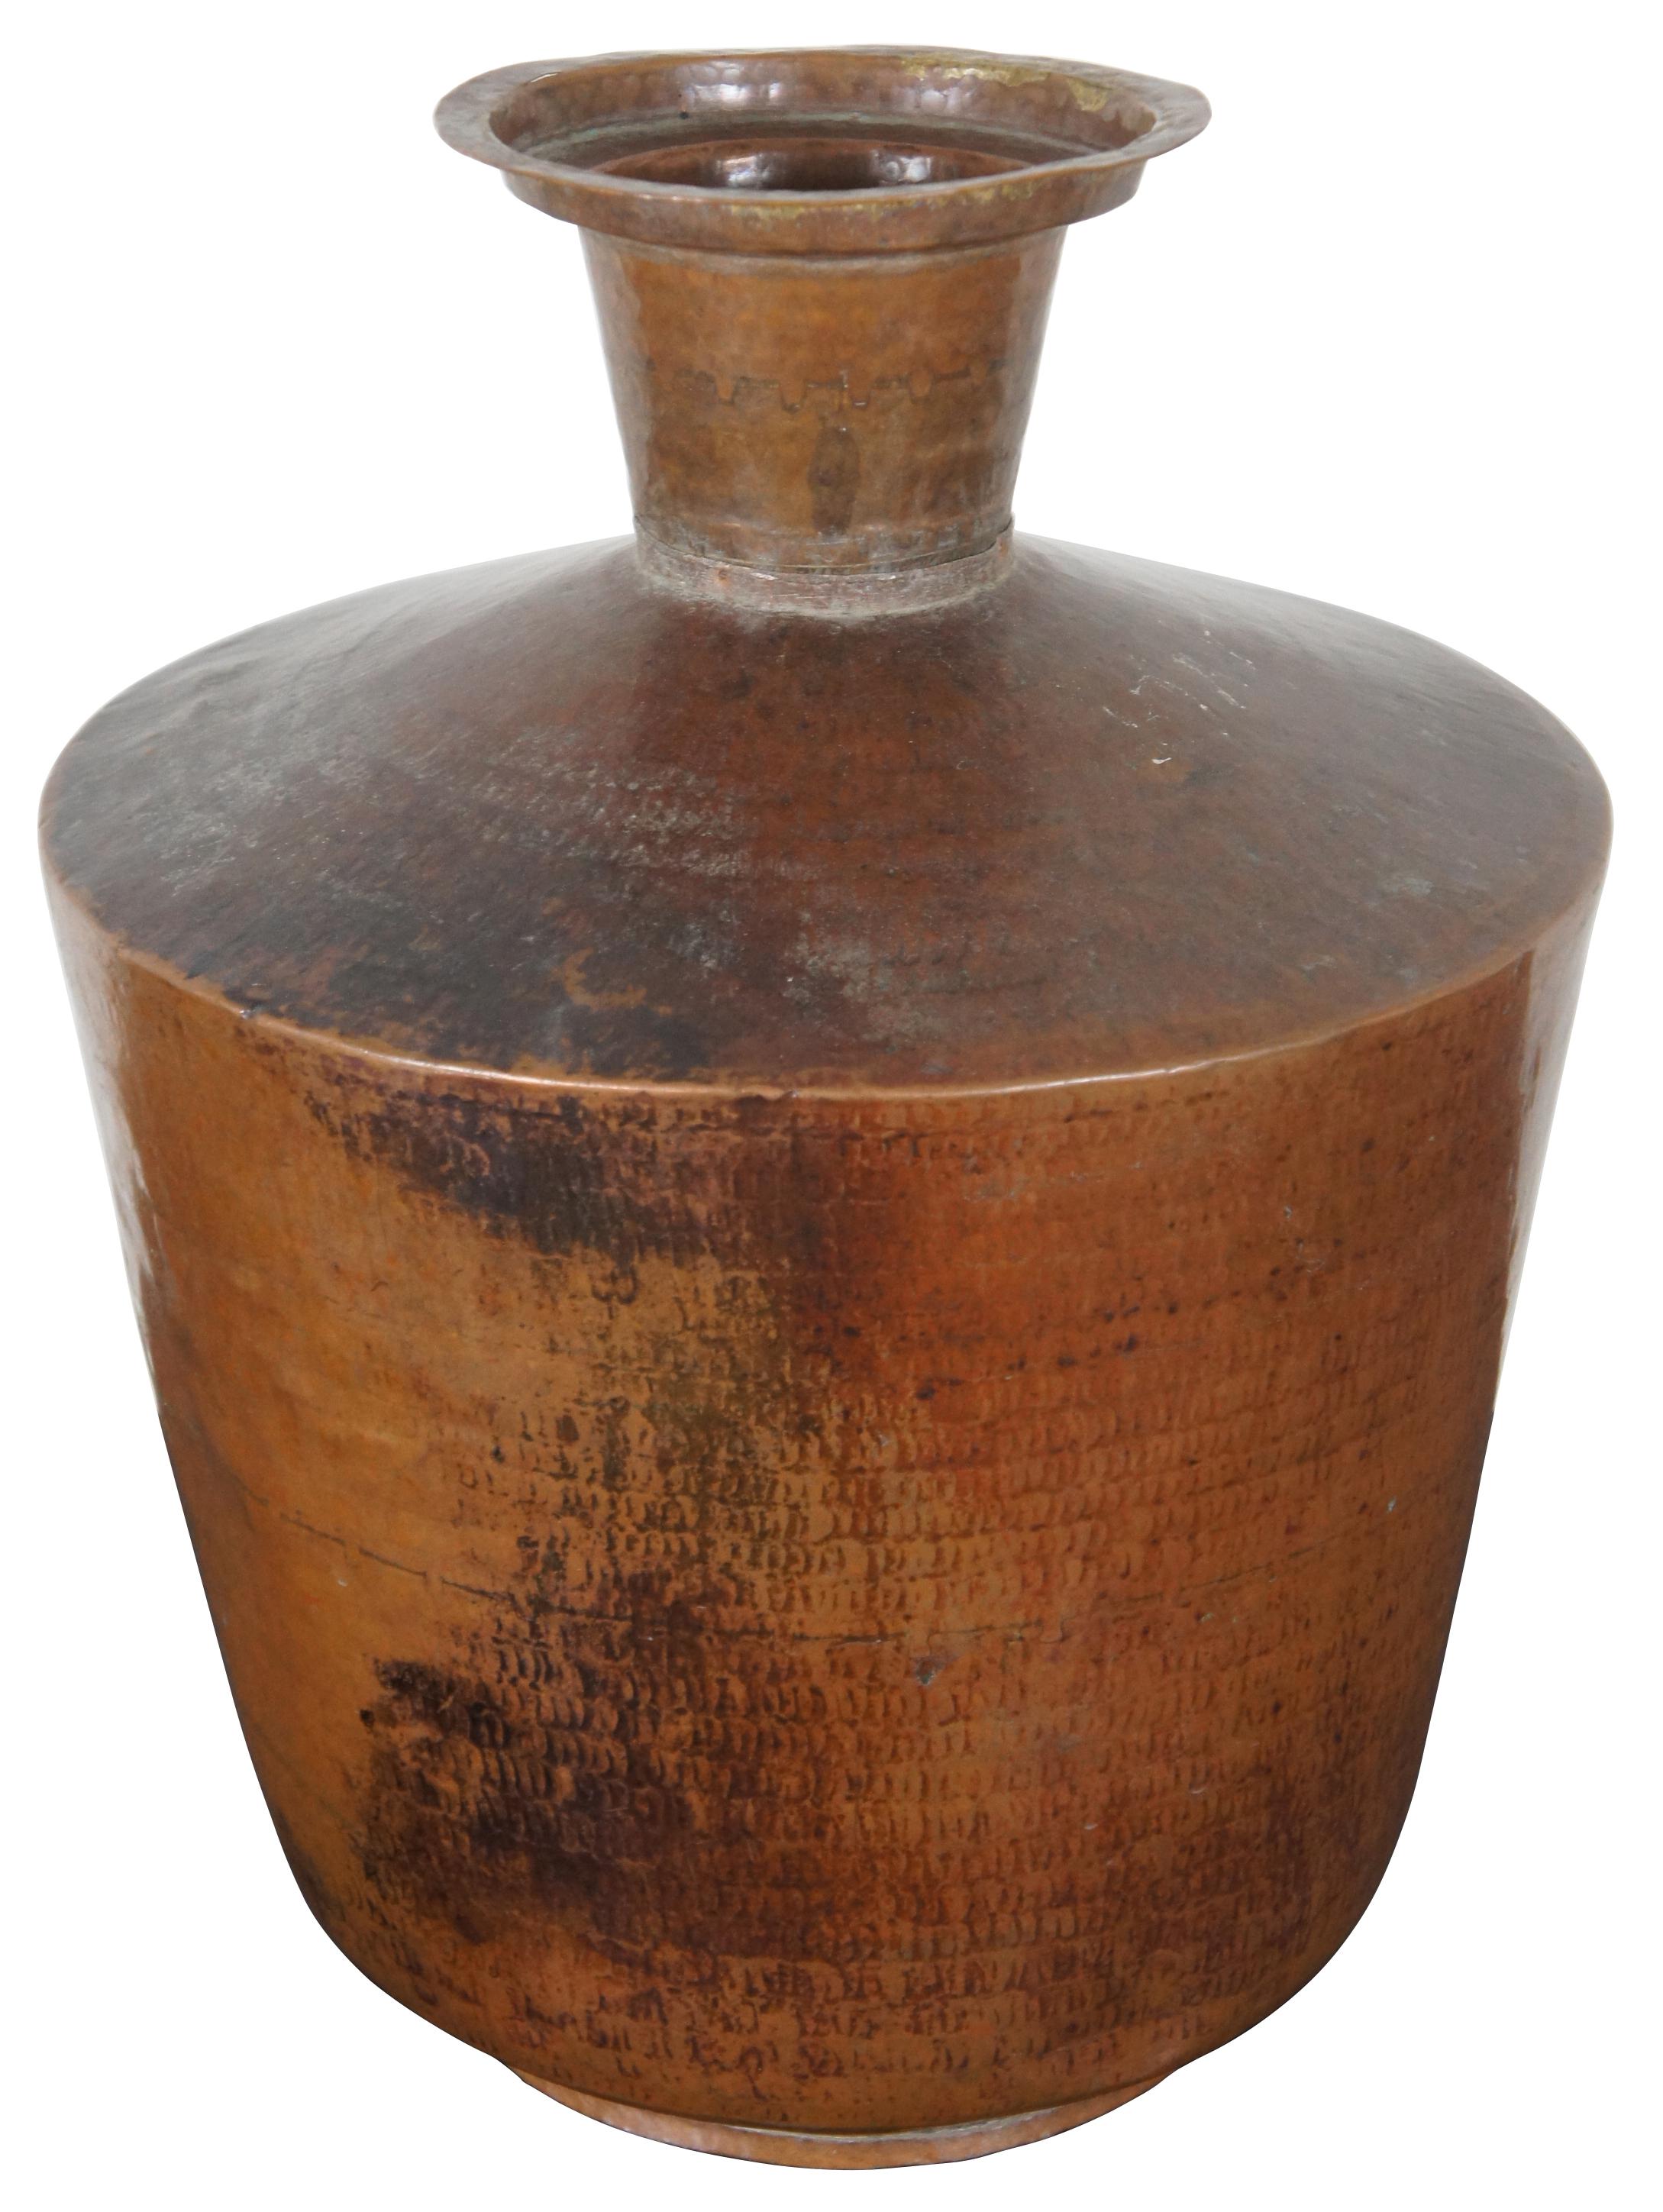 Antique hammered and dovetailed copper jug or large vase. Measure: 16